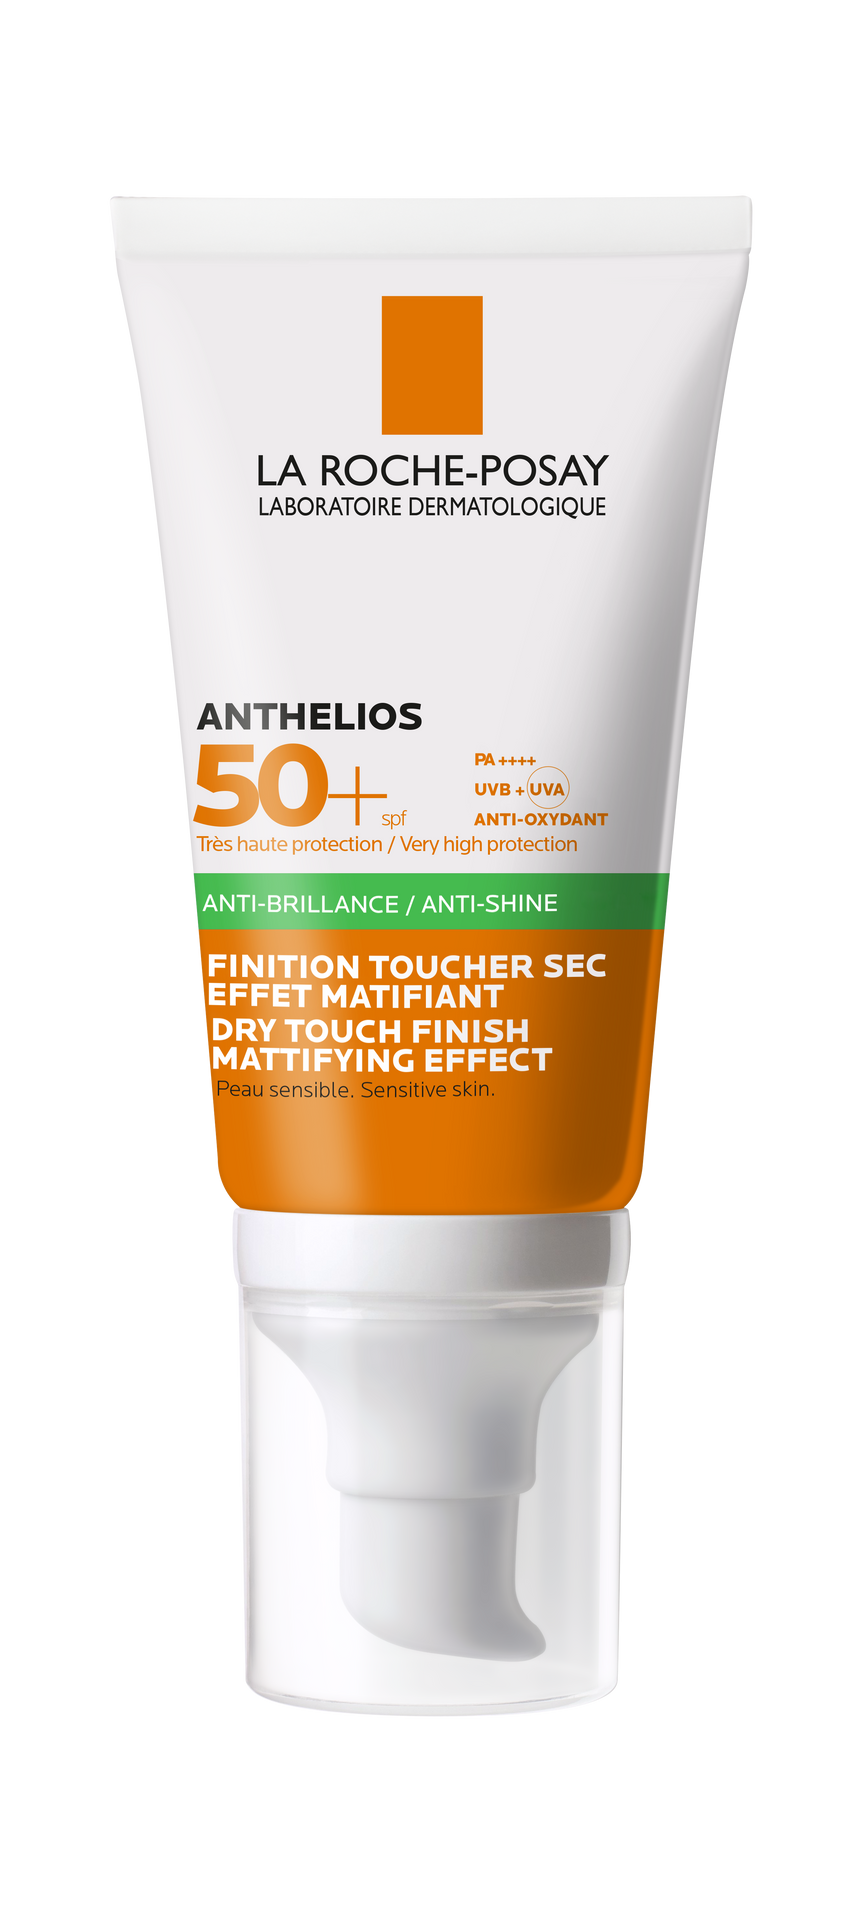 La Roche Posay ProductPage Sun Anthelios XL Wet Skin Gel Spf50 250ml 3